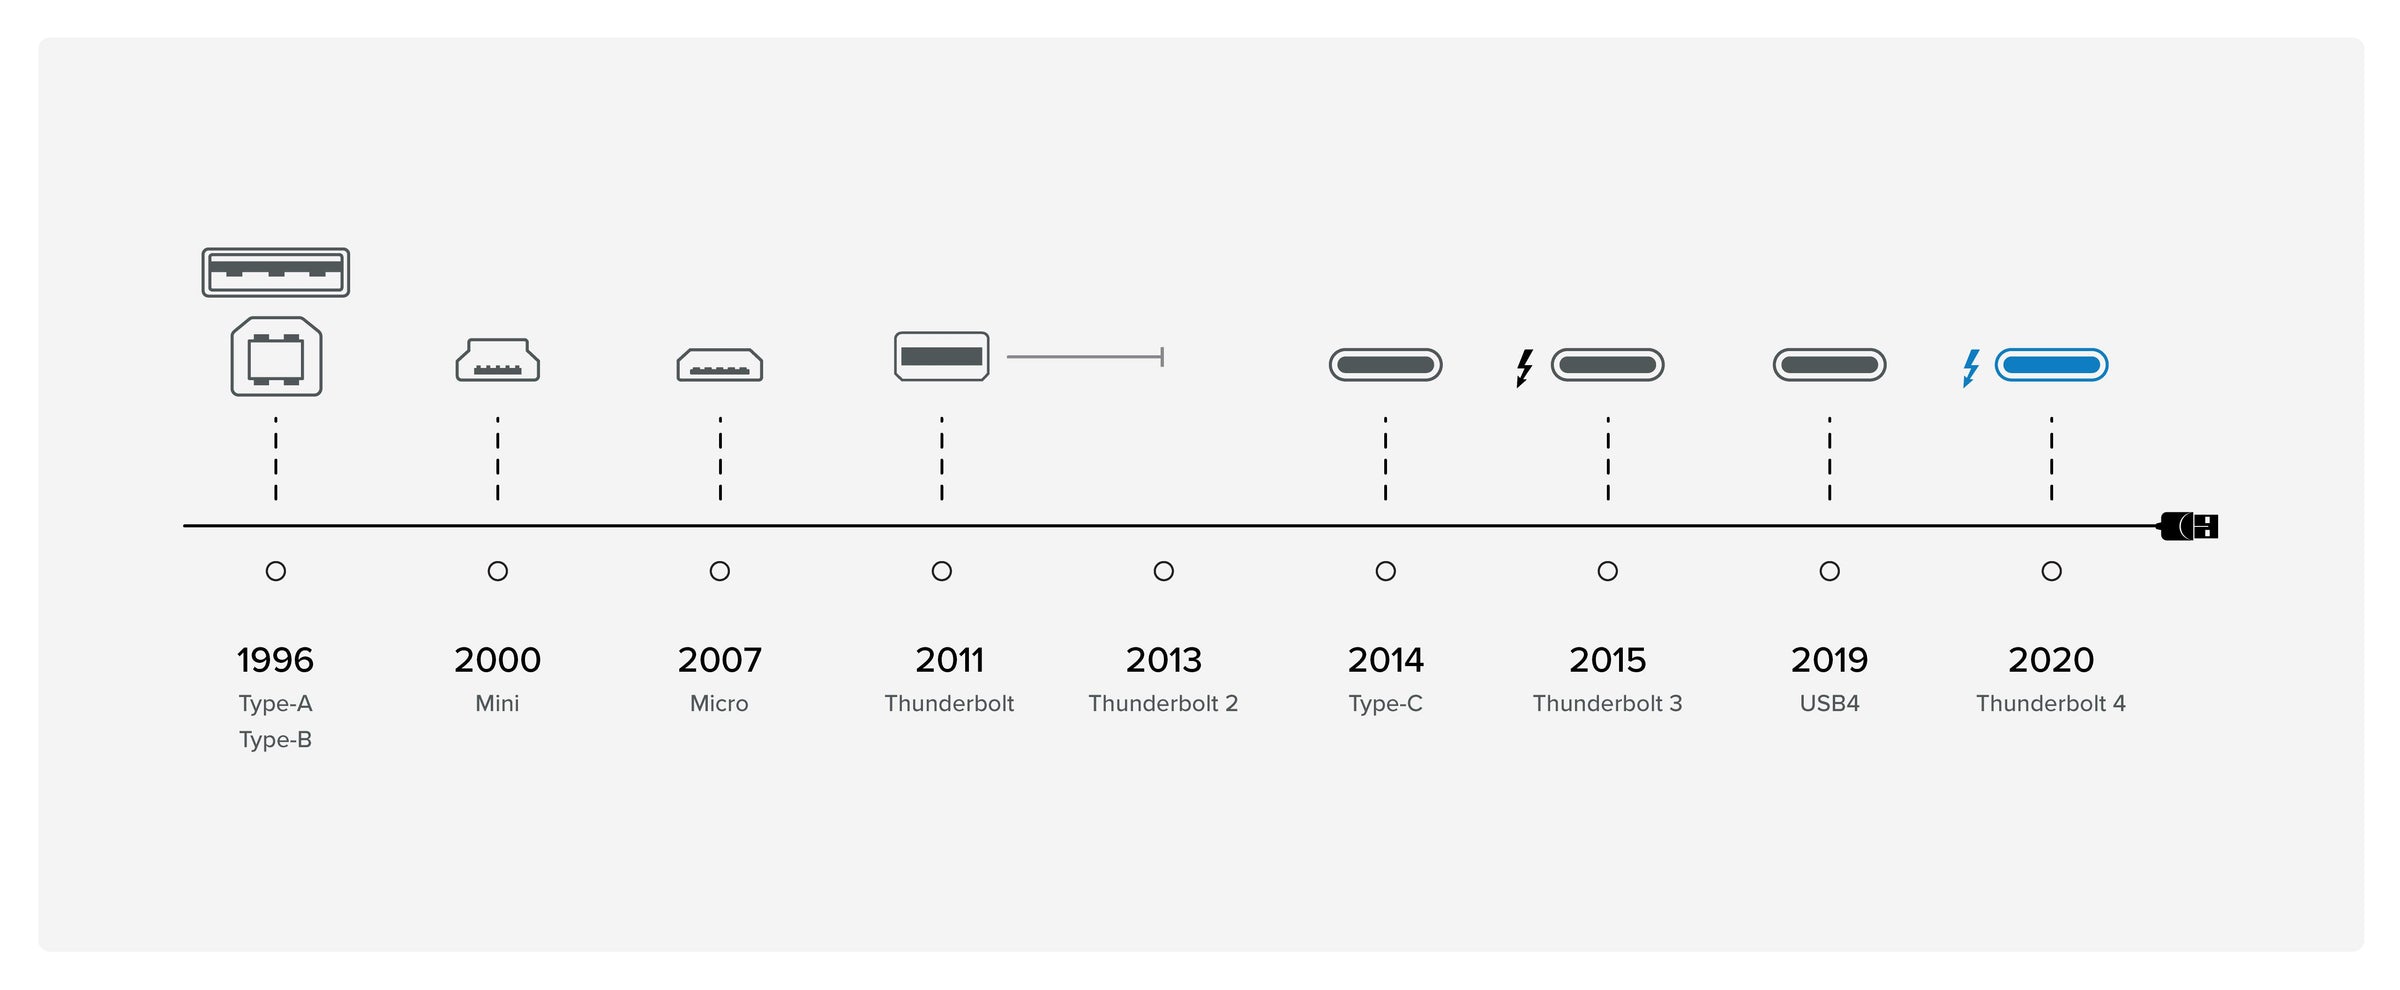 Timeline of USB and Thunderbolt ports